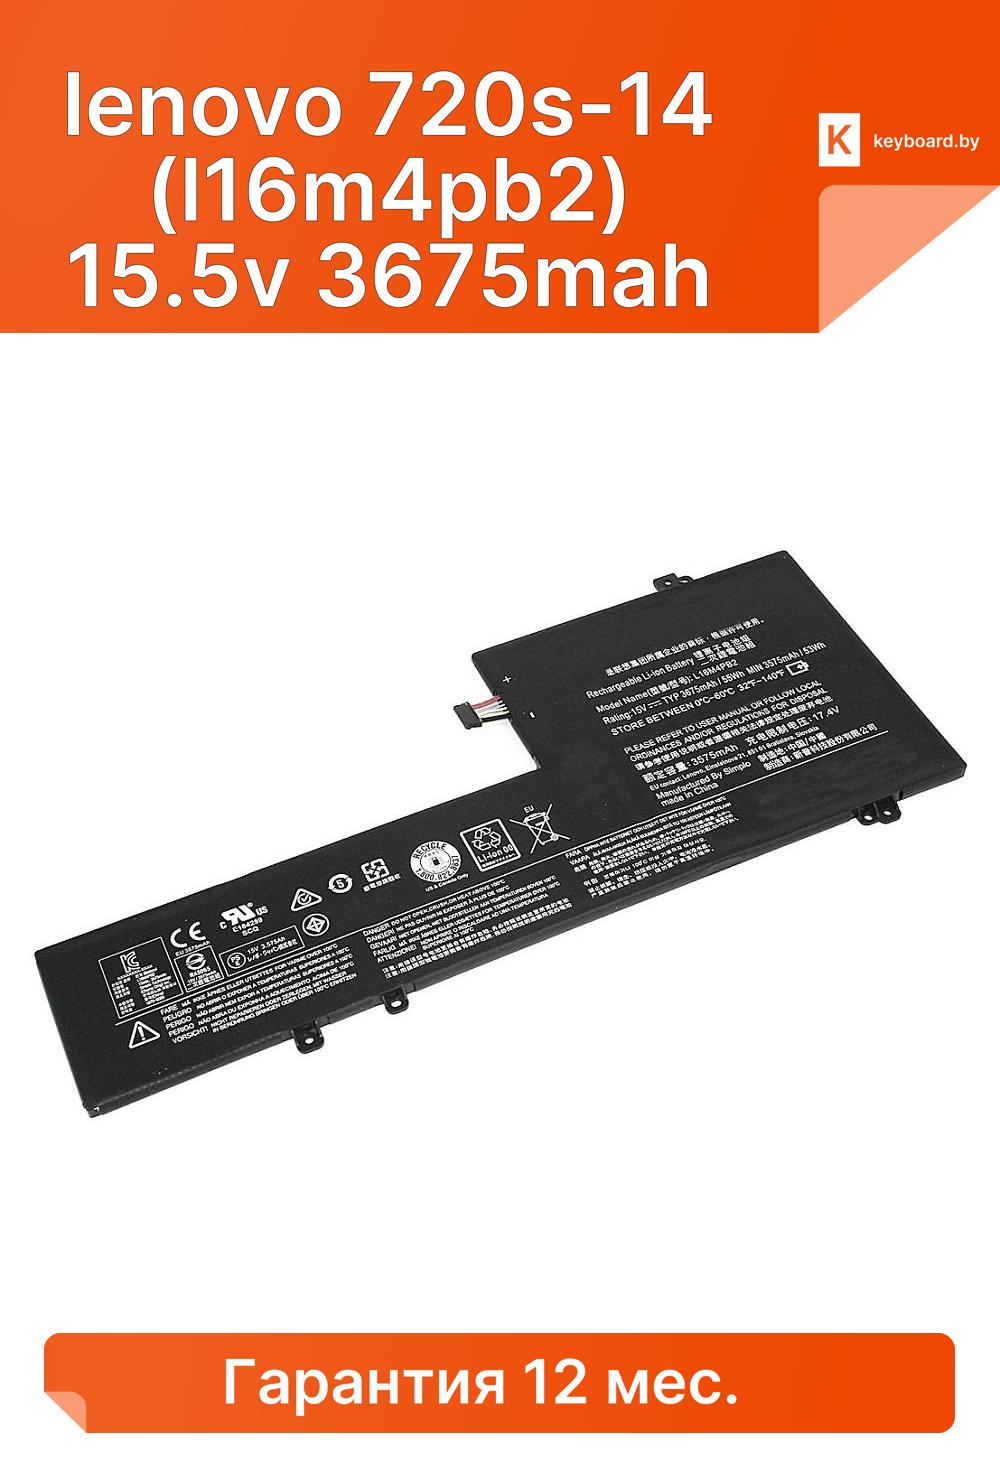 Аккумуляторная батарея для ноутбука lenovo 720s-14 (l16m4pb2) 15.5v 3675mah